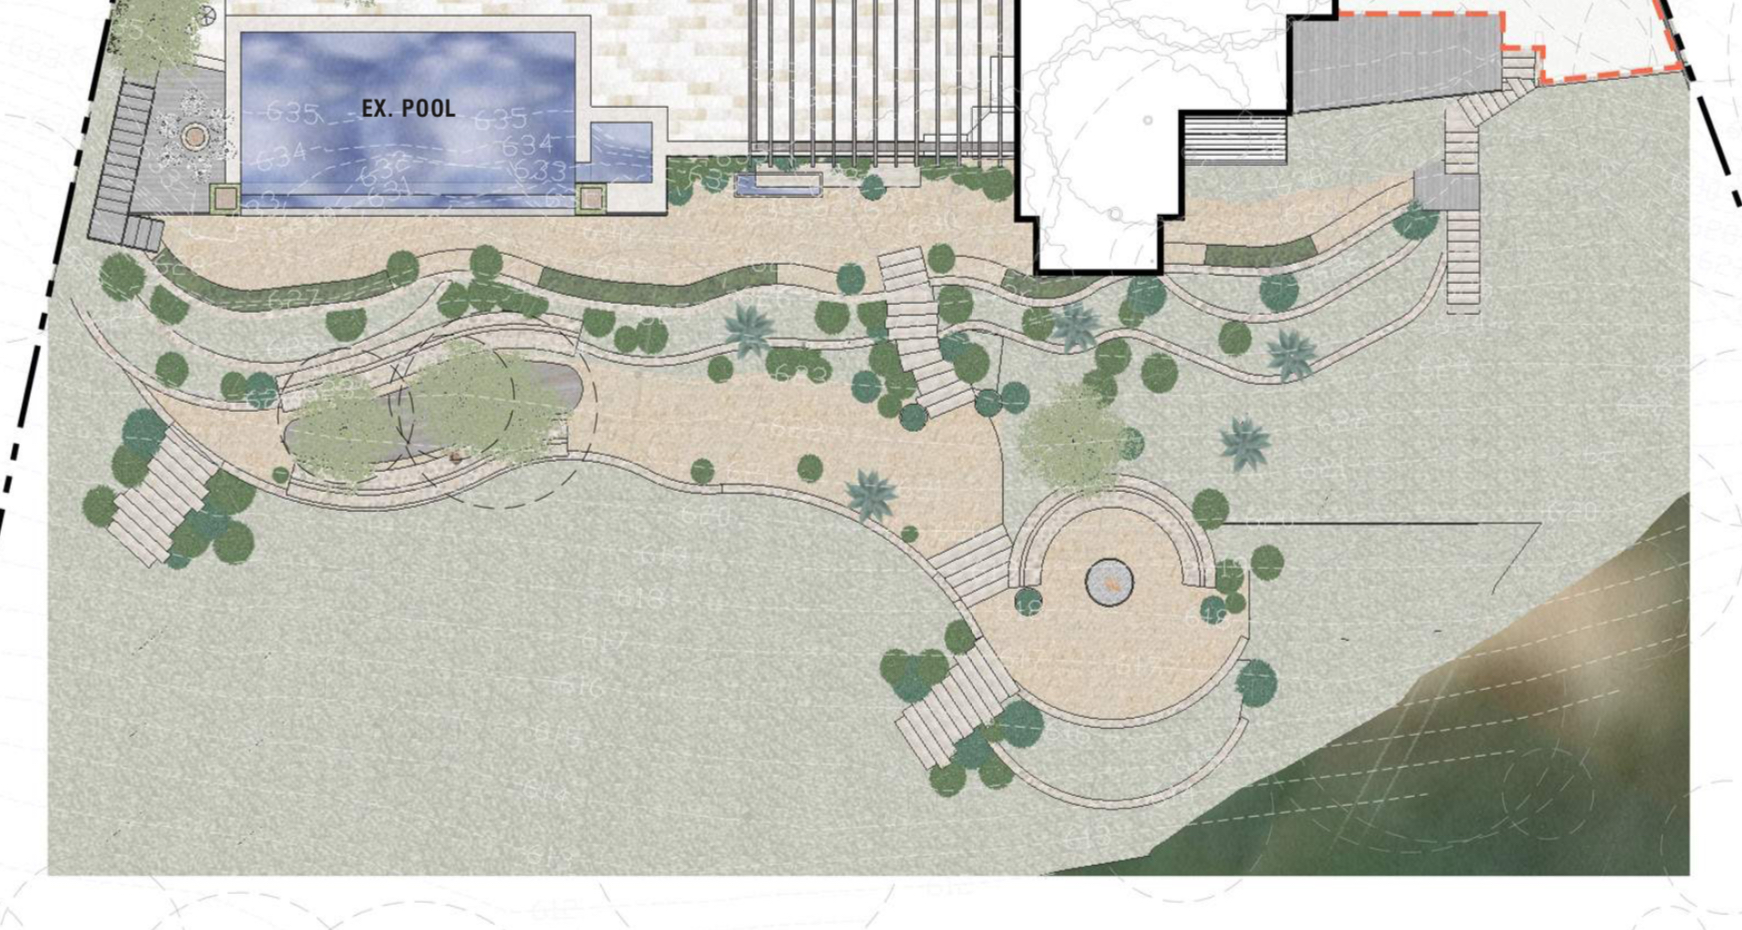 camille styles backyard landscape design plan